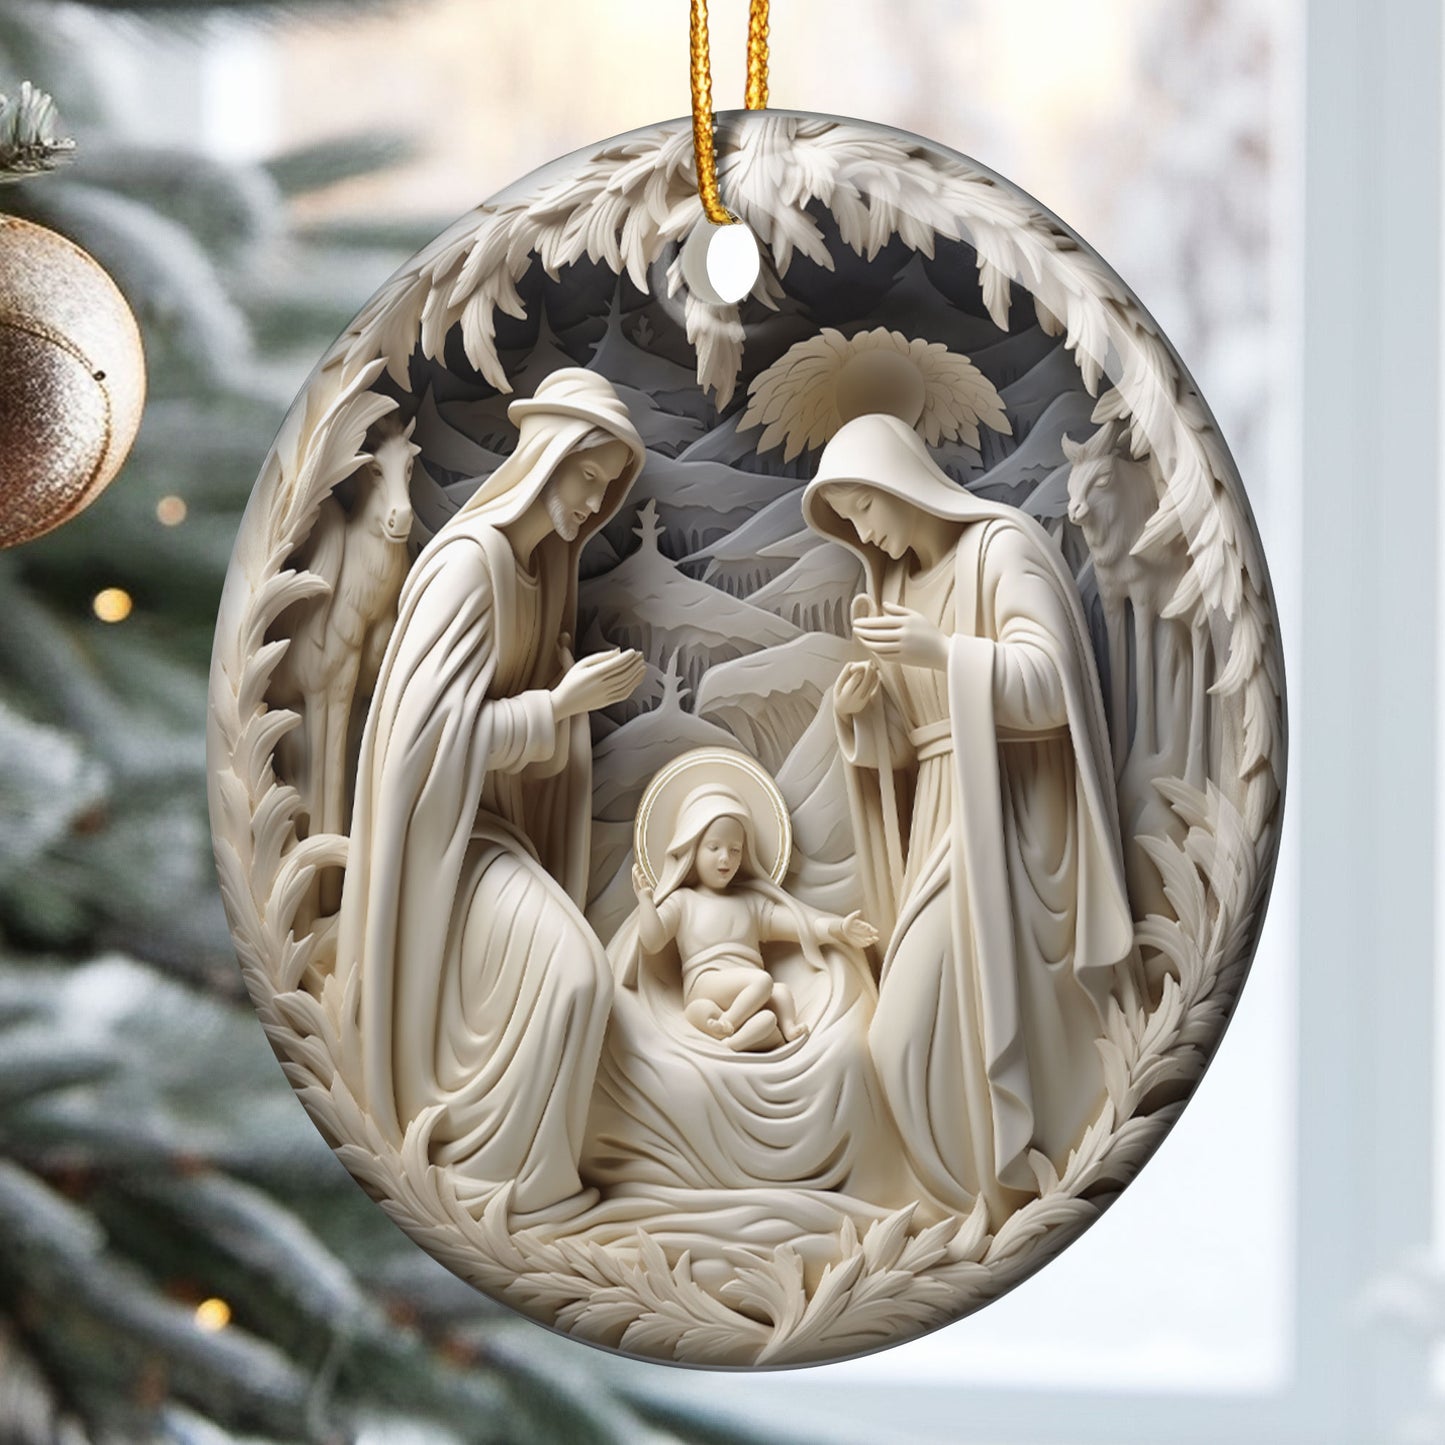 Birth Of Jesus - Personalized Ceramic Ornament